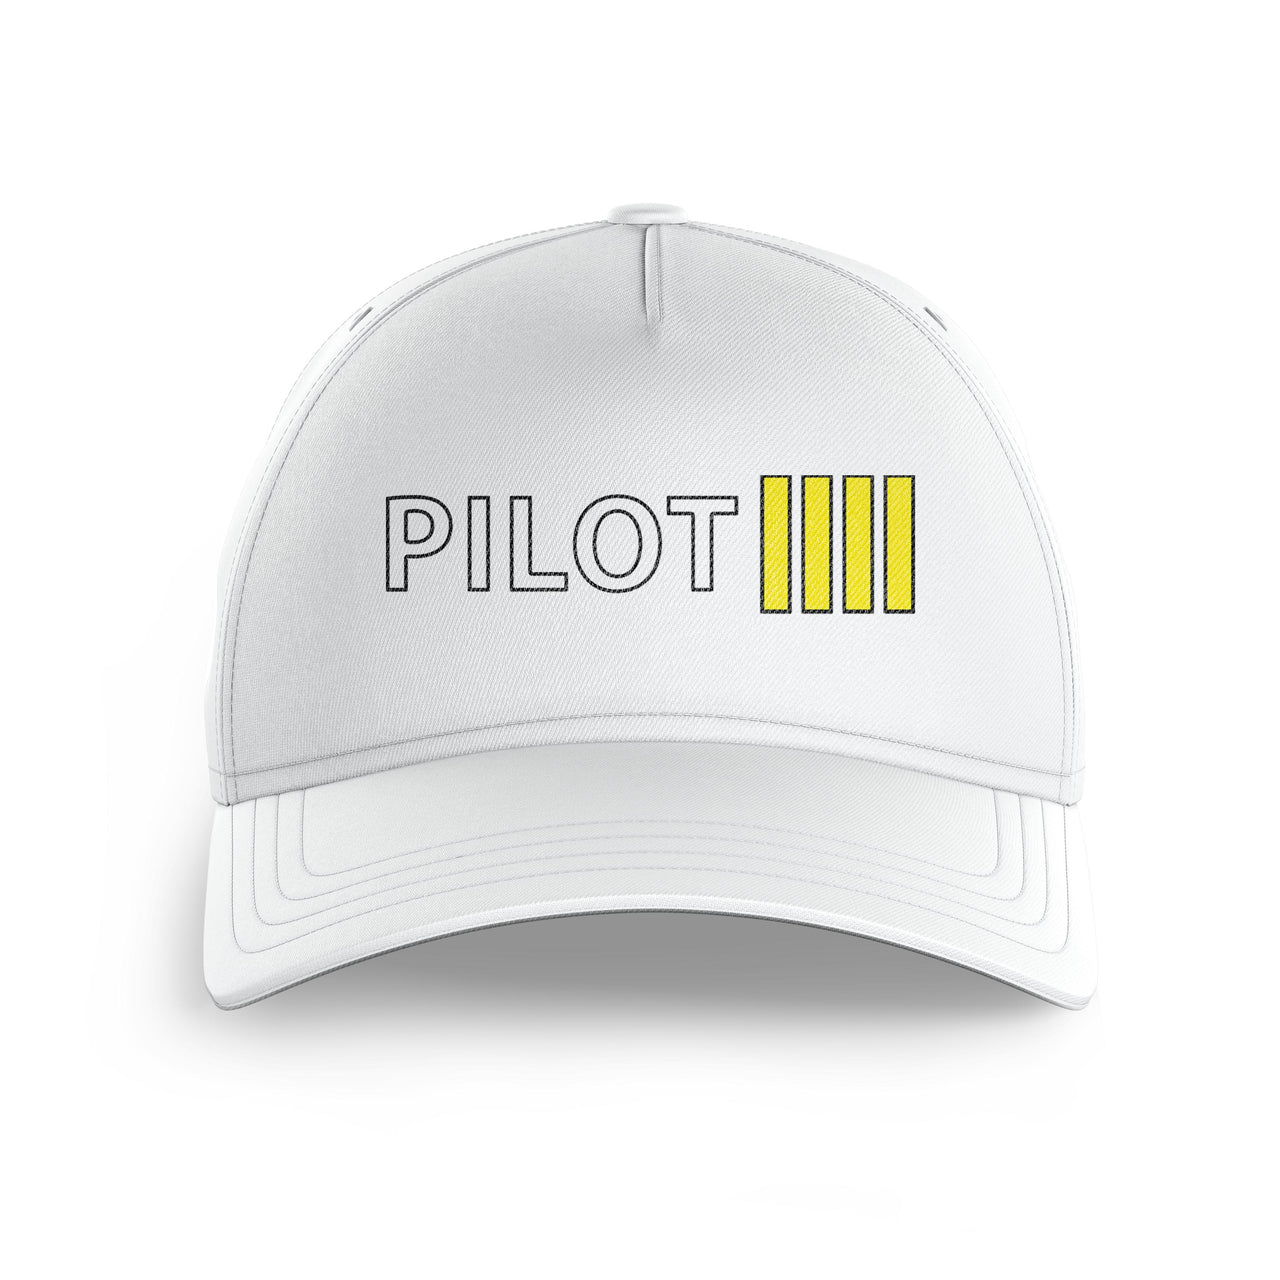 Pilot & Stripes (4 Lines) Printed Hats